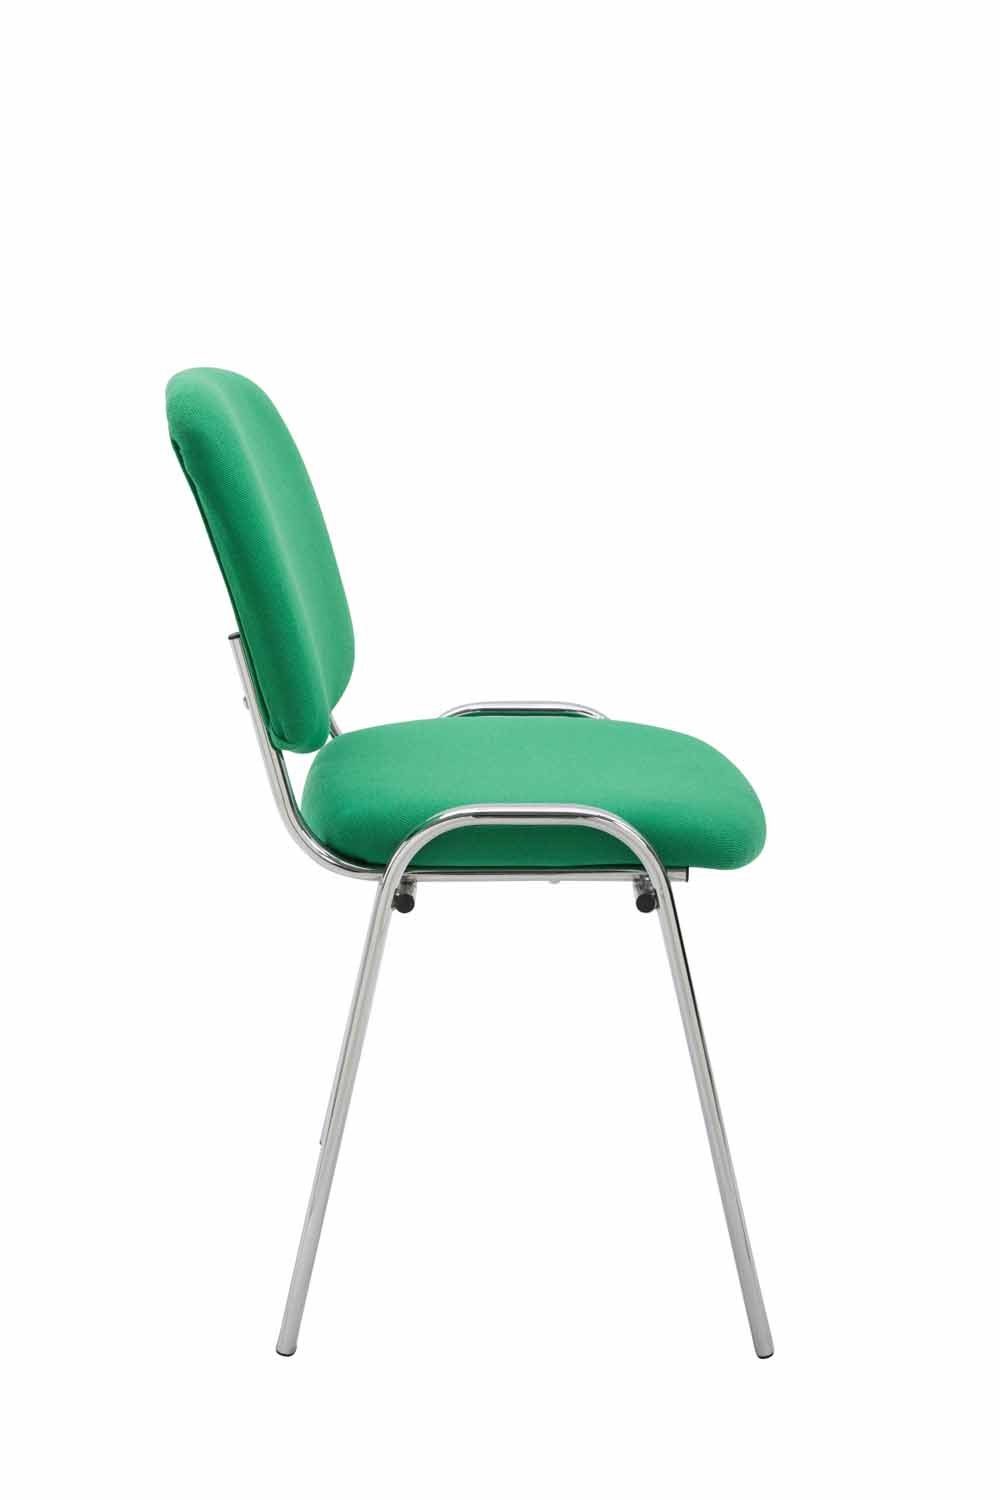 Warteraumstuhl hochwertiger Stoff Besucherstuhl - grün TPFLiving (Besprechungsstuhl - Konferenzstuhl Sitzfläche: Keen Polsterung Metall Gestell: mit Messestuhl), chrom - -